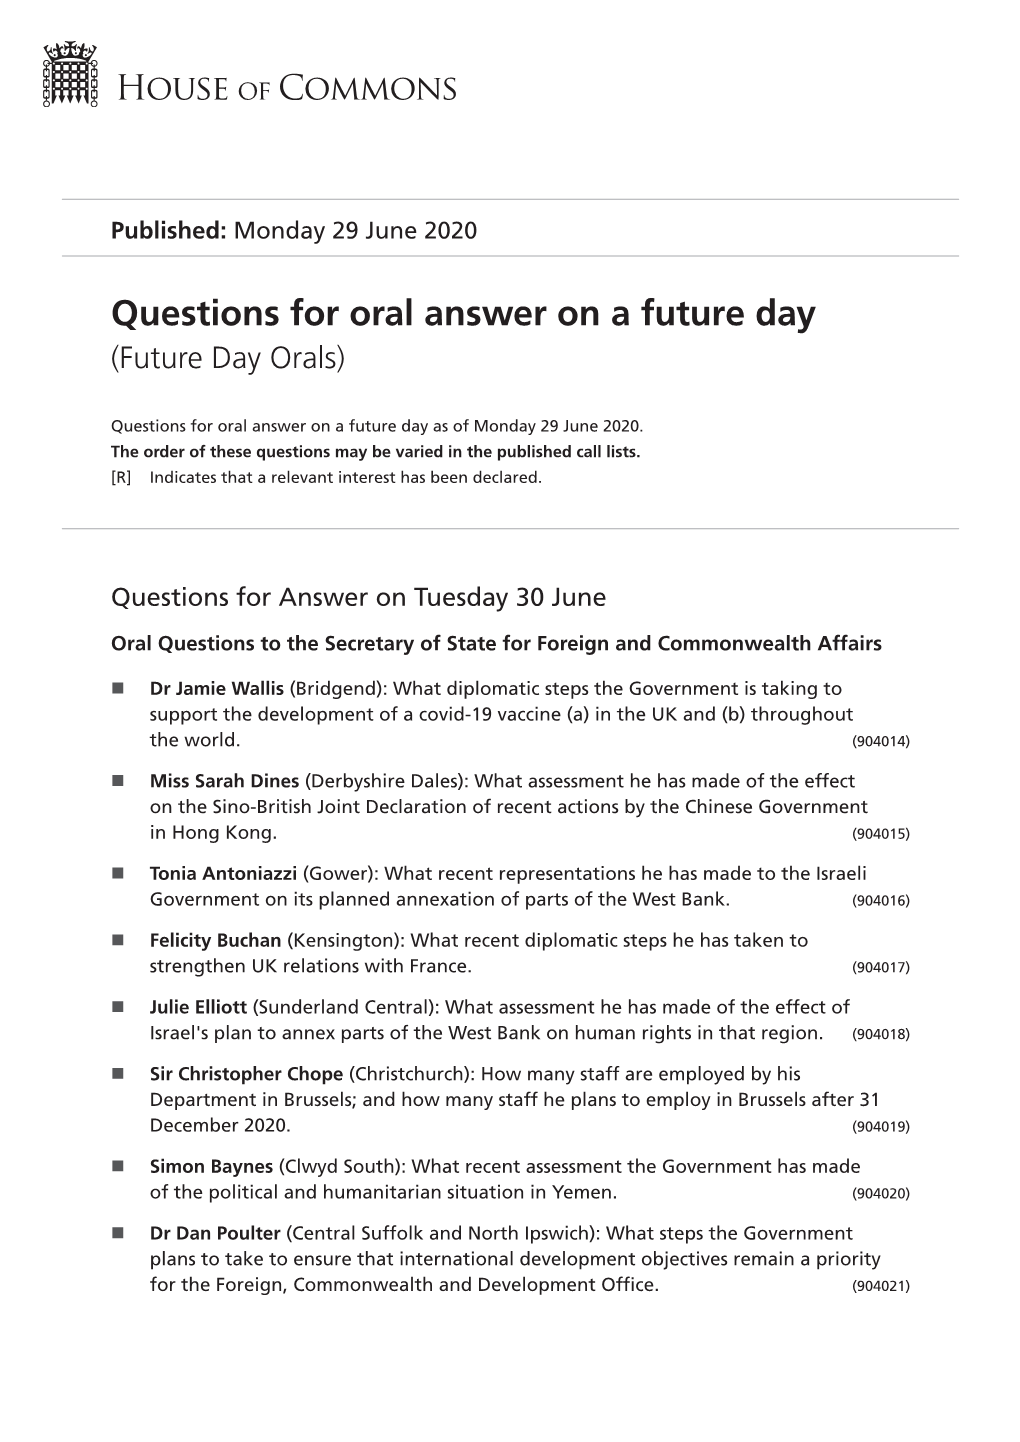 Future Oral Questions As of Mon 29 Jun 2020